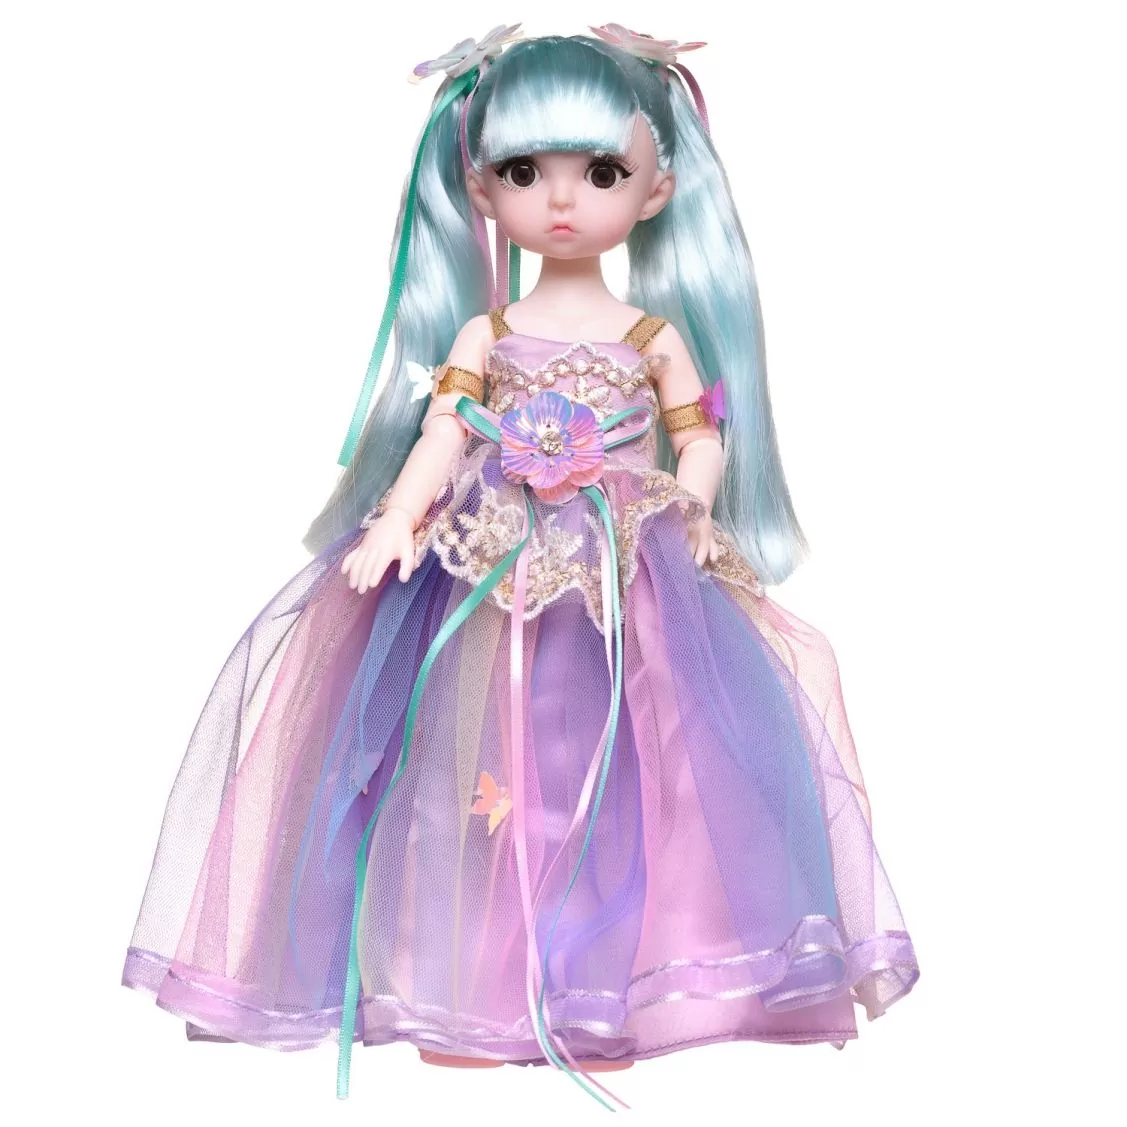 Кукла Ardana Princess - фото